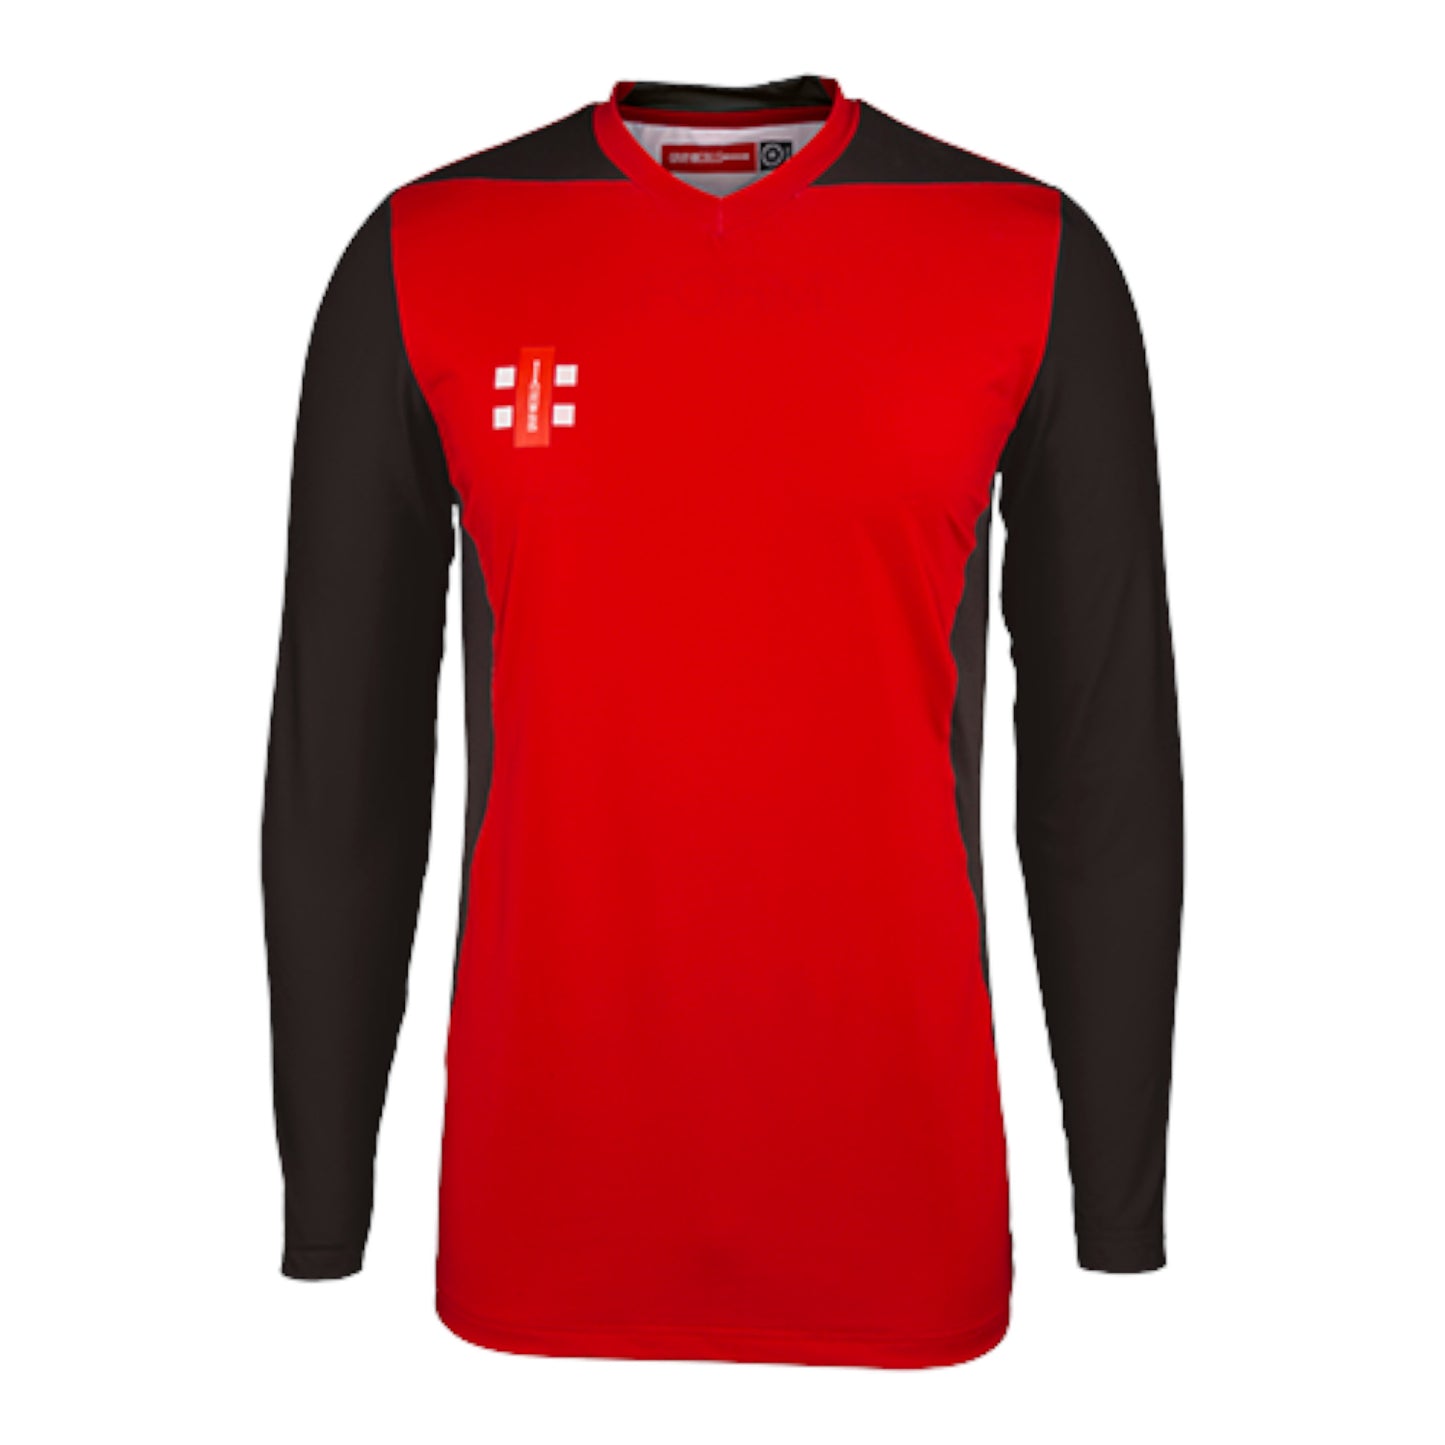 GN T20 LS Shirt Red & Black